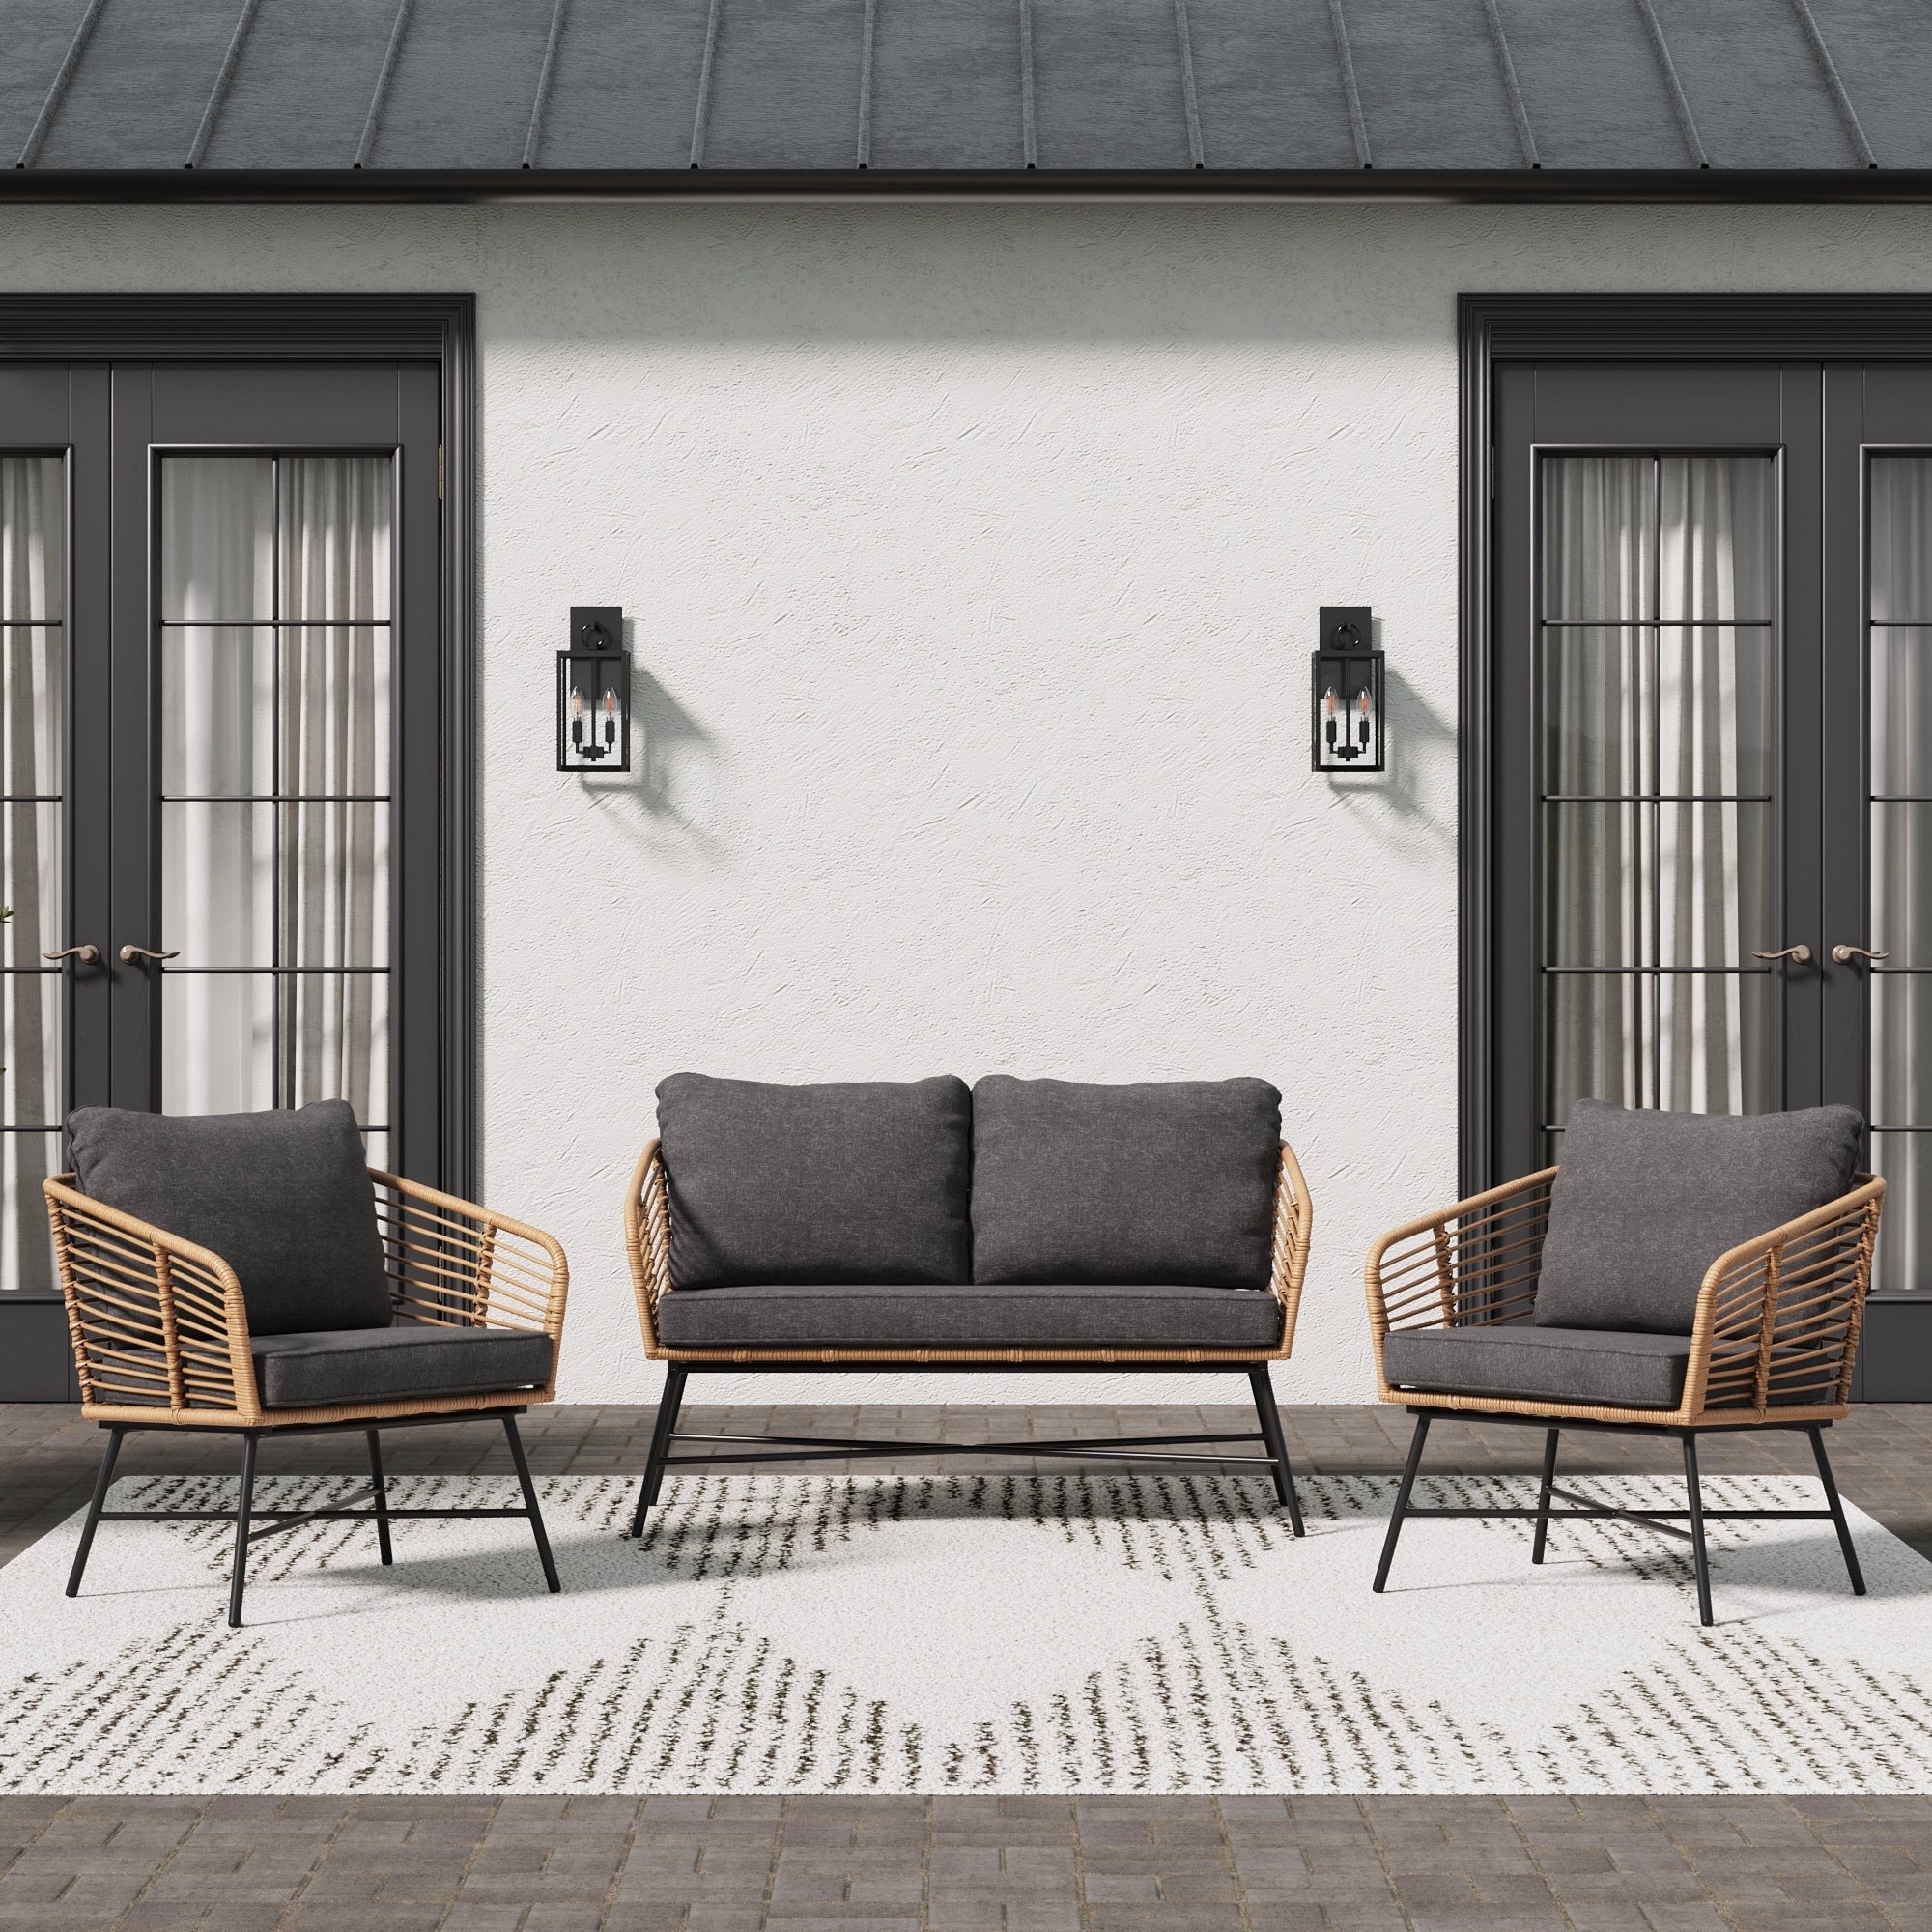 Flow Bohemian 3-piece Wicker Furniture Set  Rattan Patio Conversation Set With Cushions